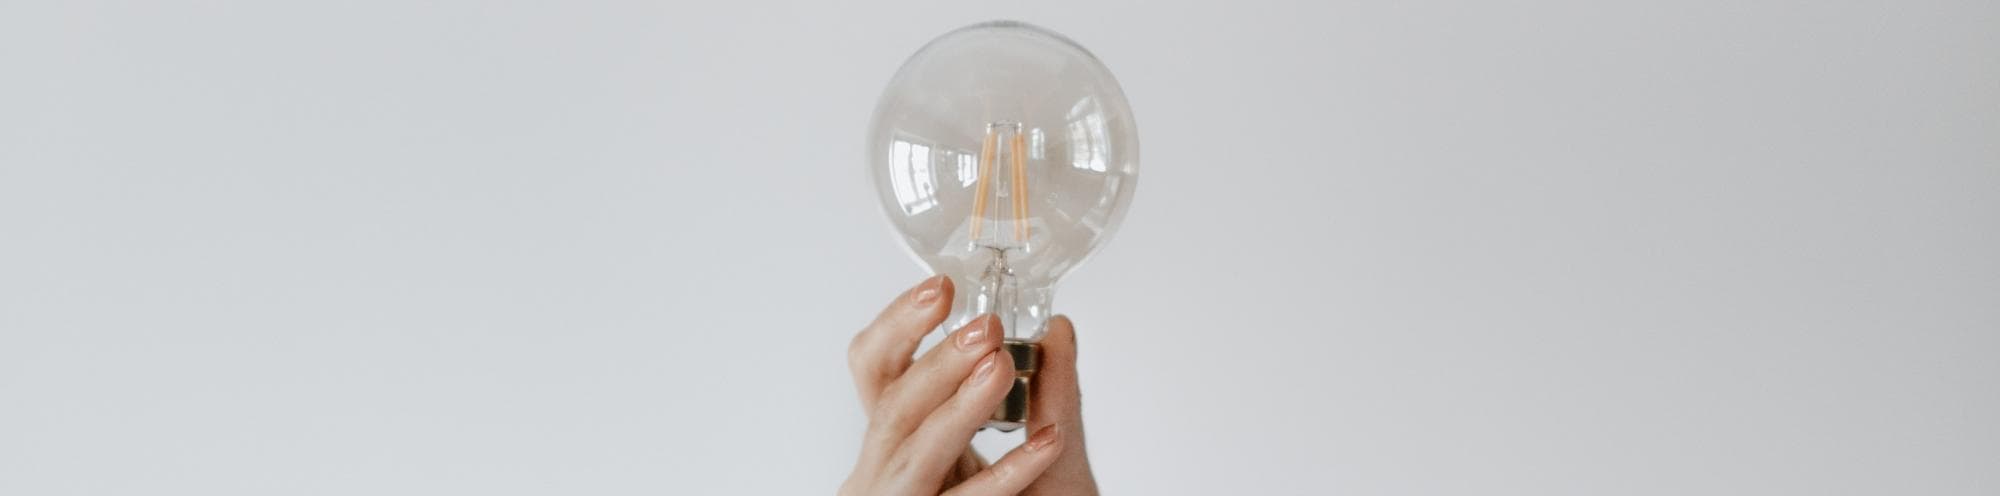 Idee tips lamp